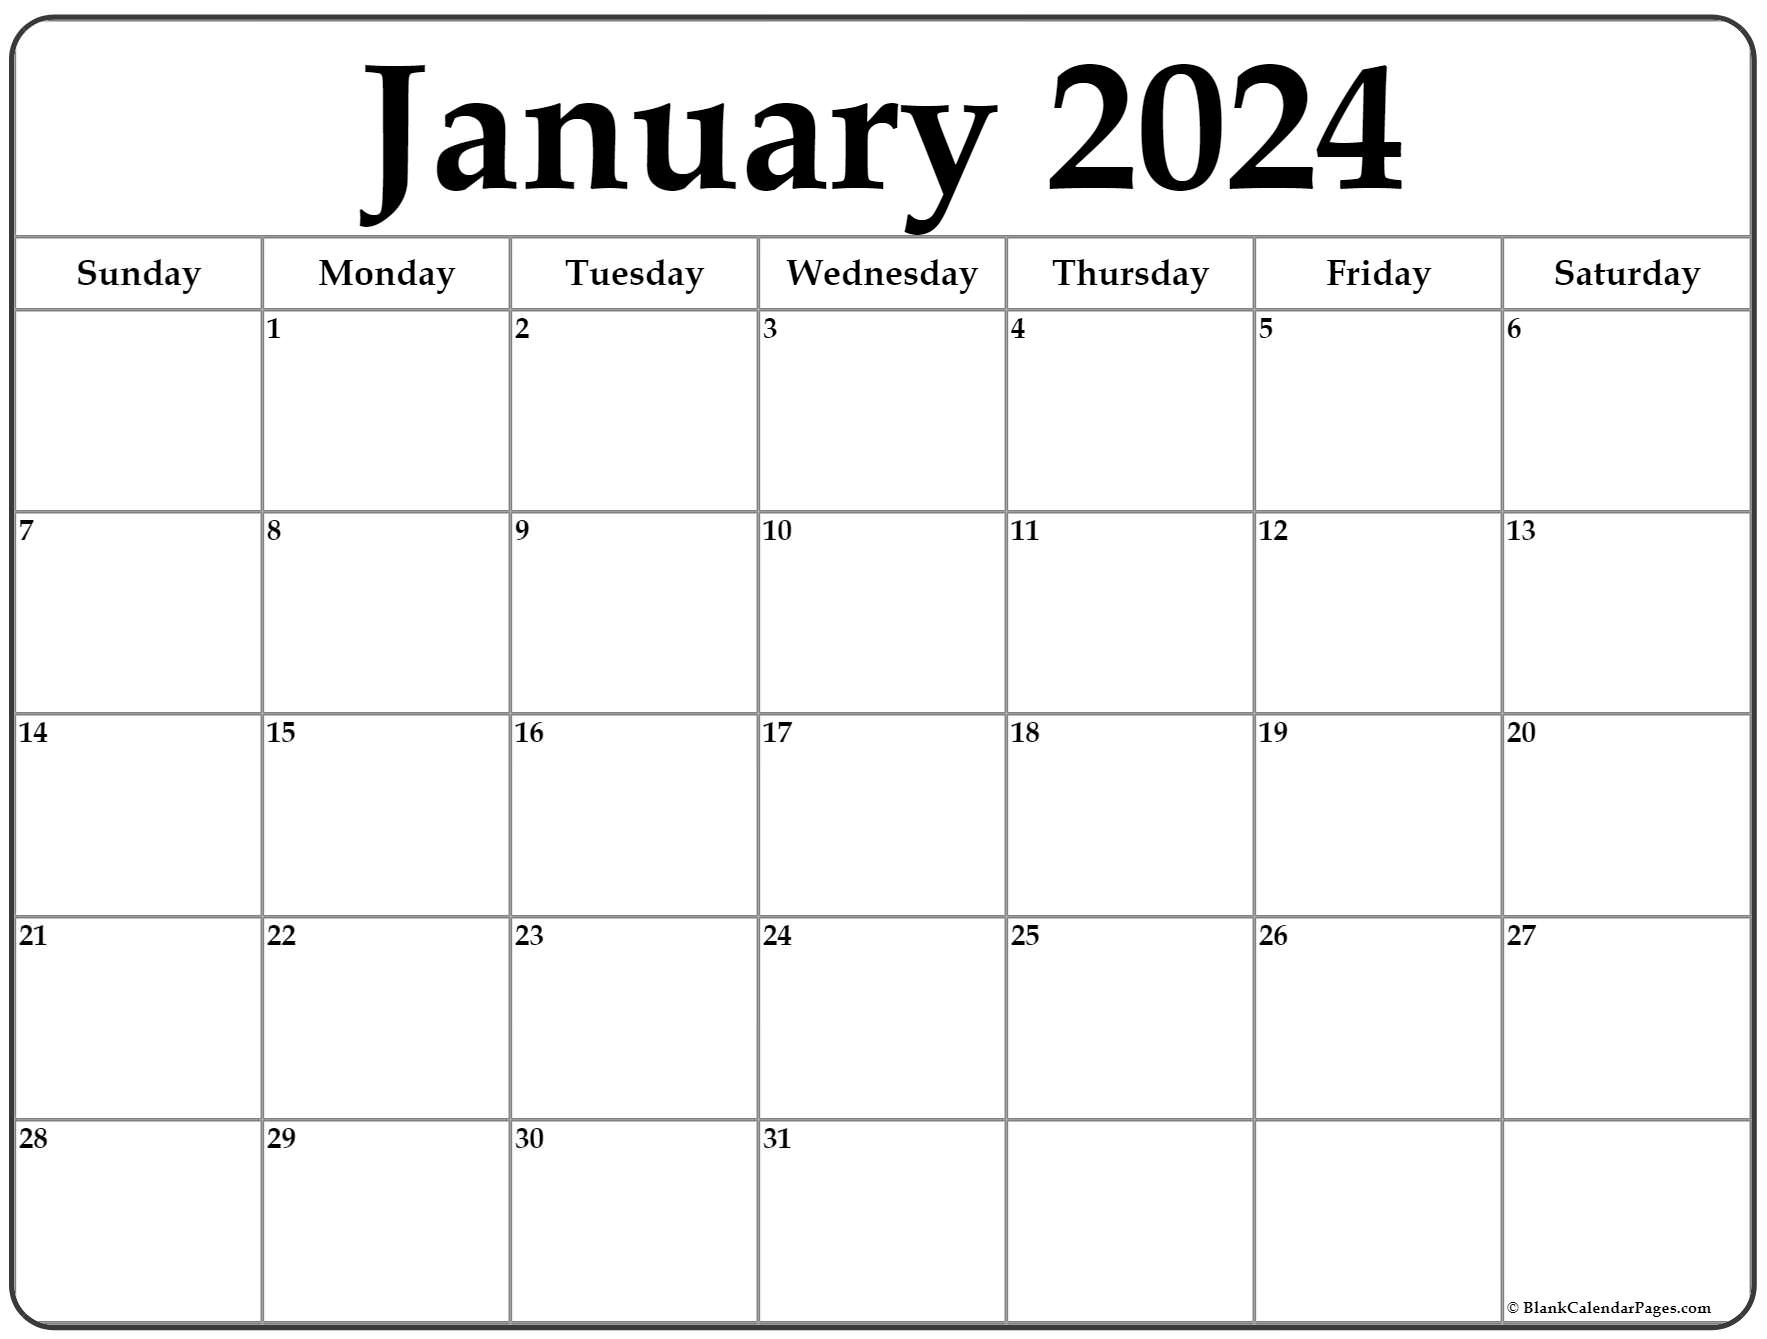 January 2024 Calendar | Free Printable Calendar for 2024 Monthly Printable Calendar Free